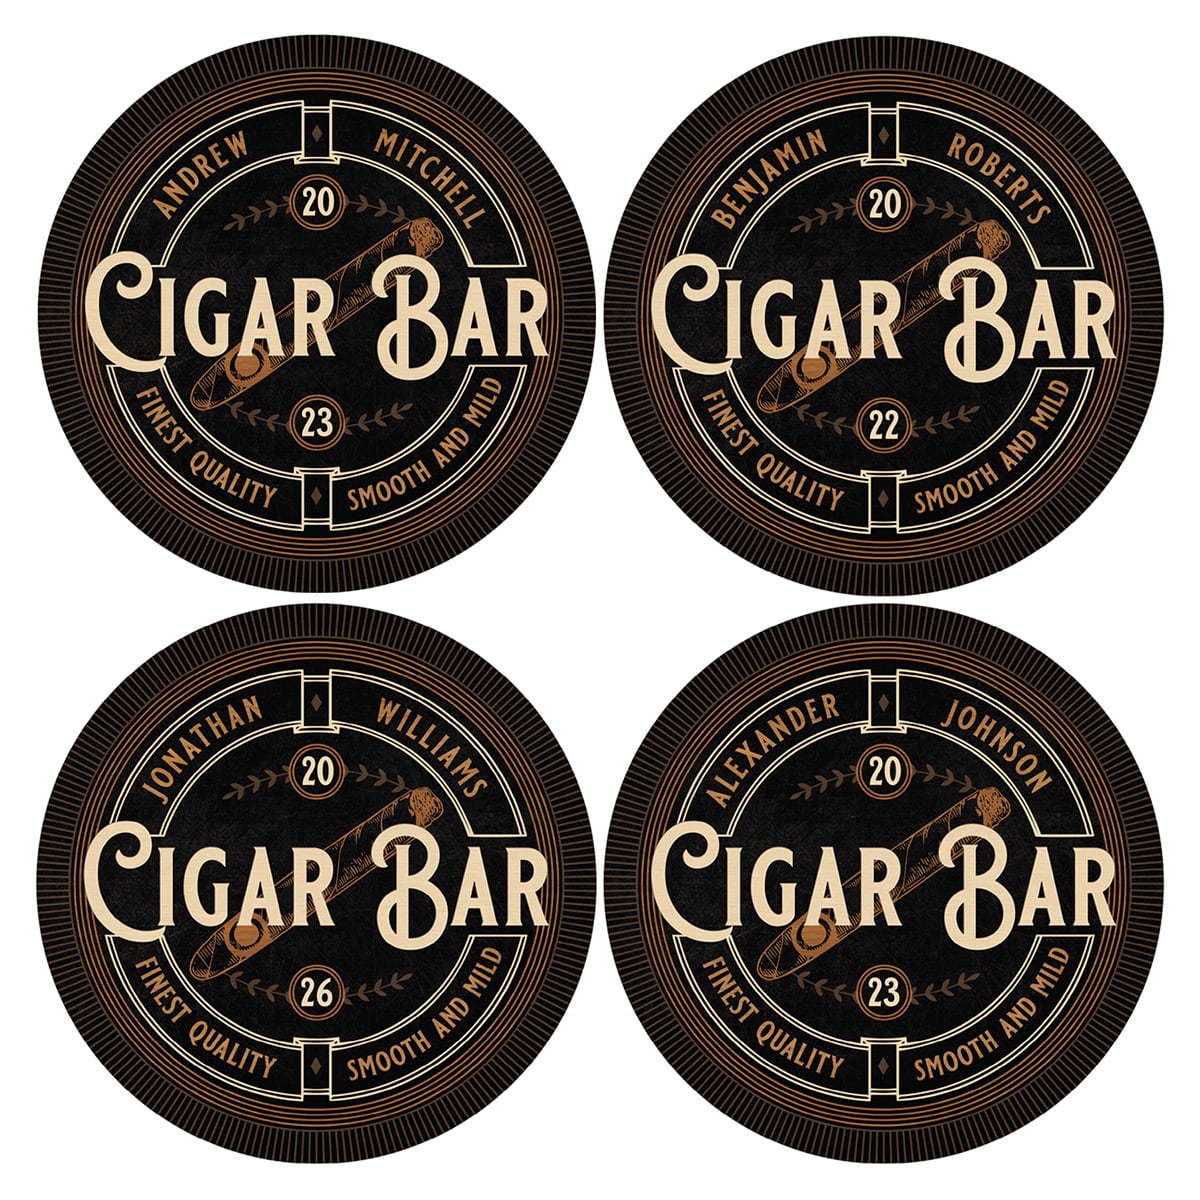 Smooth and Mild Custom Cigar Bar Sign